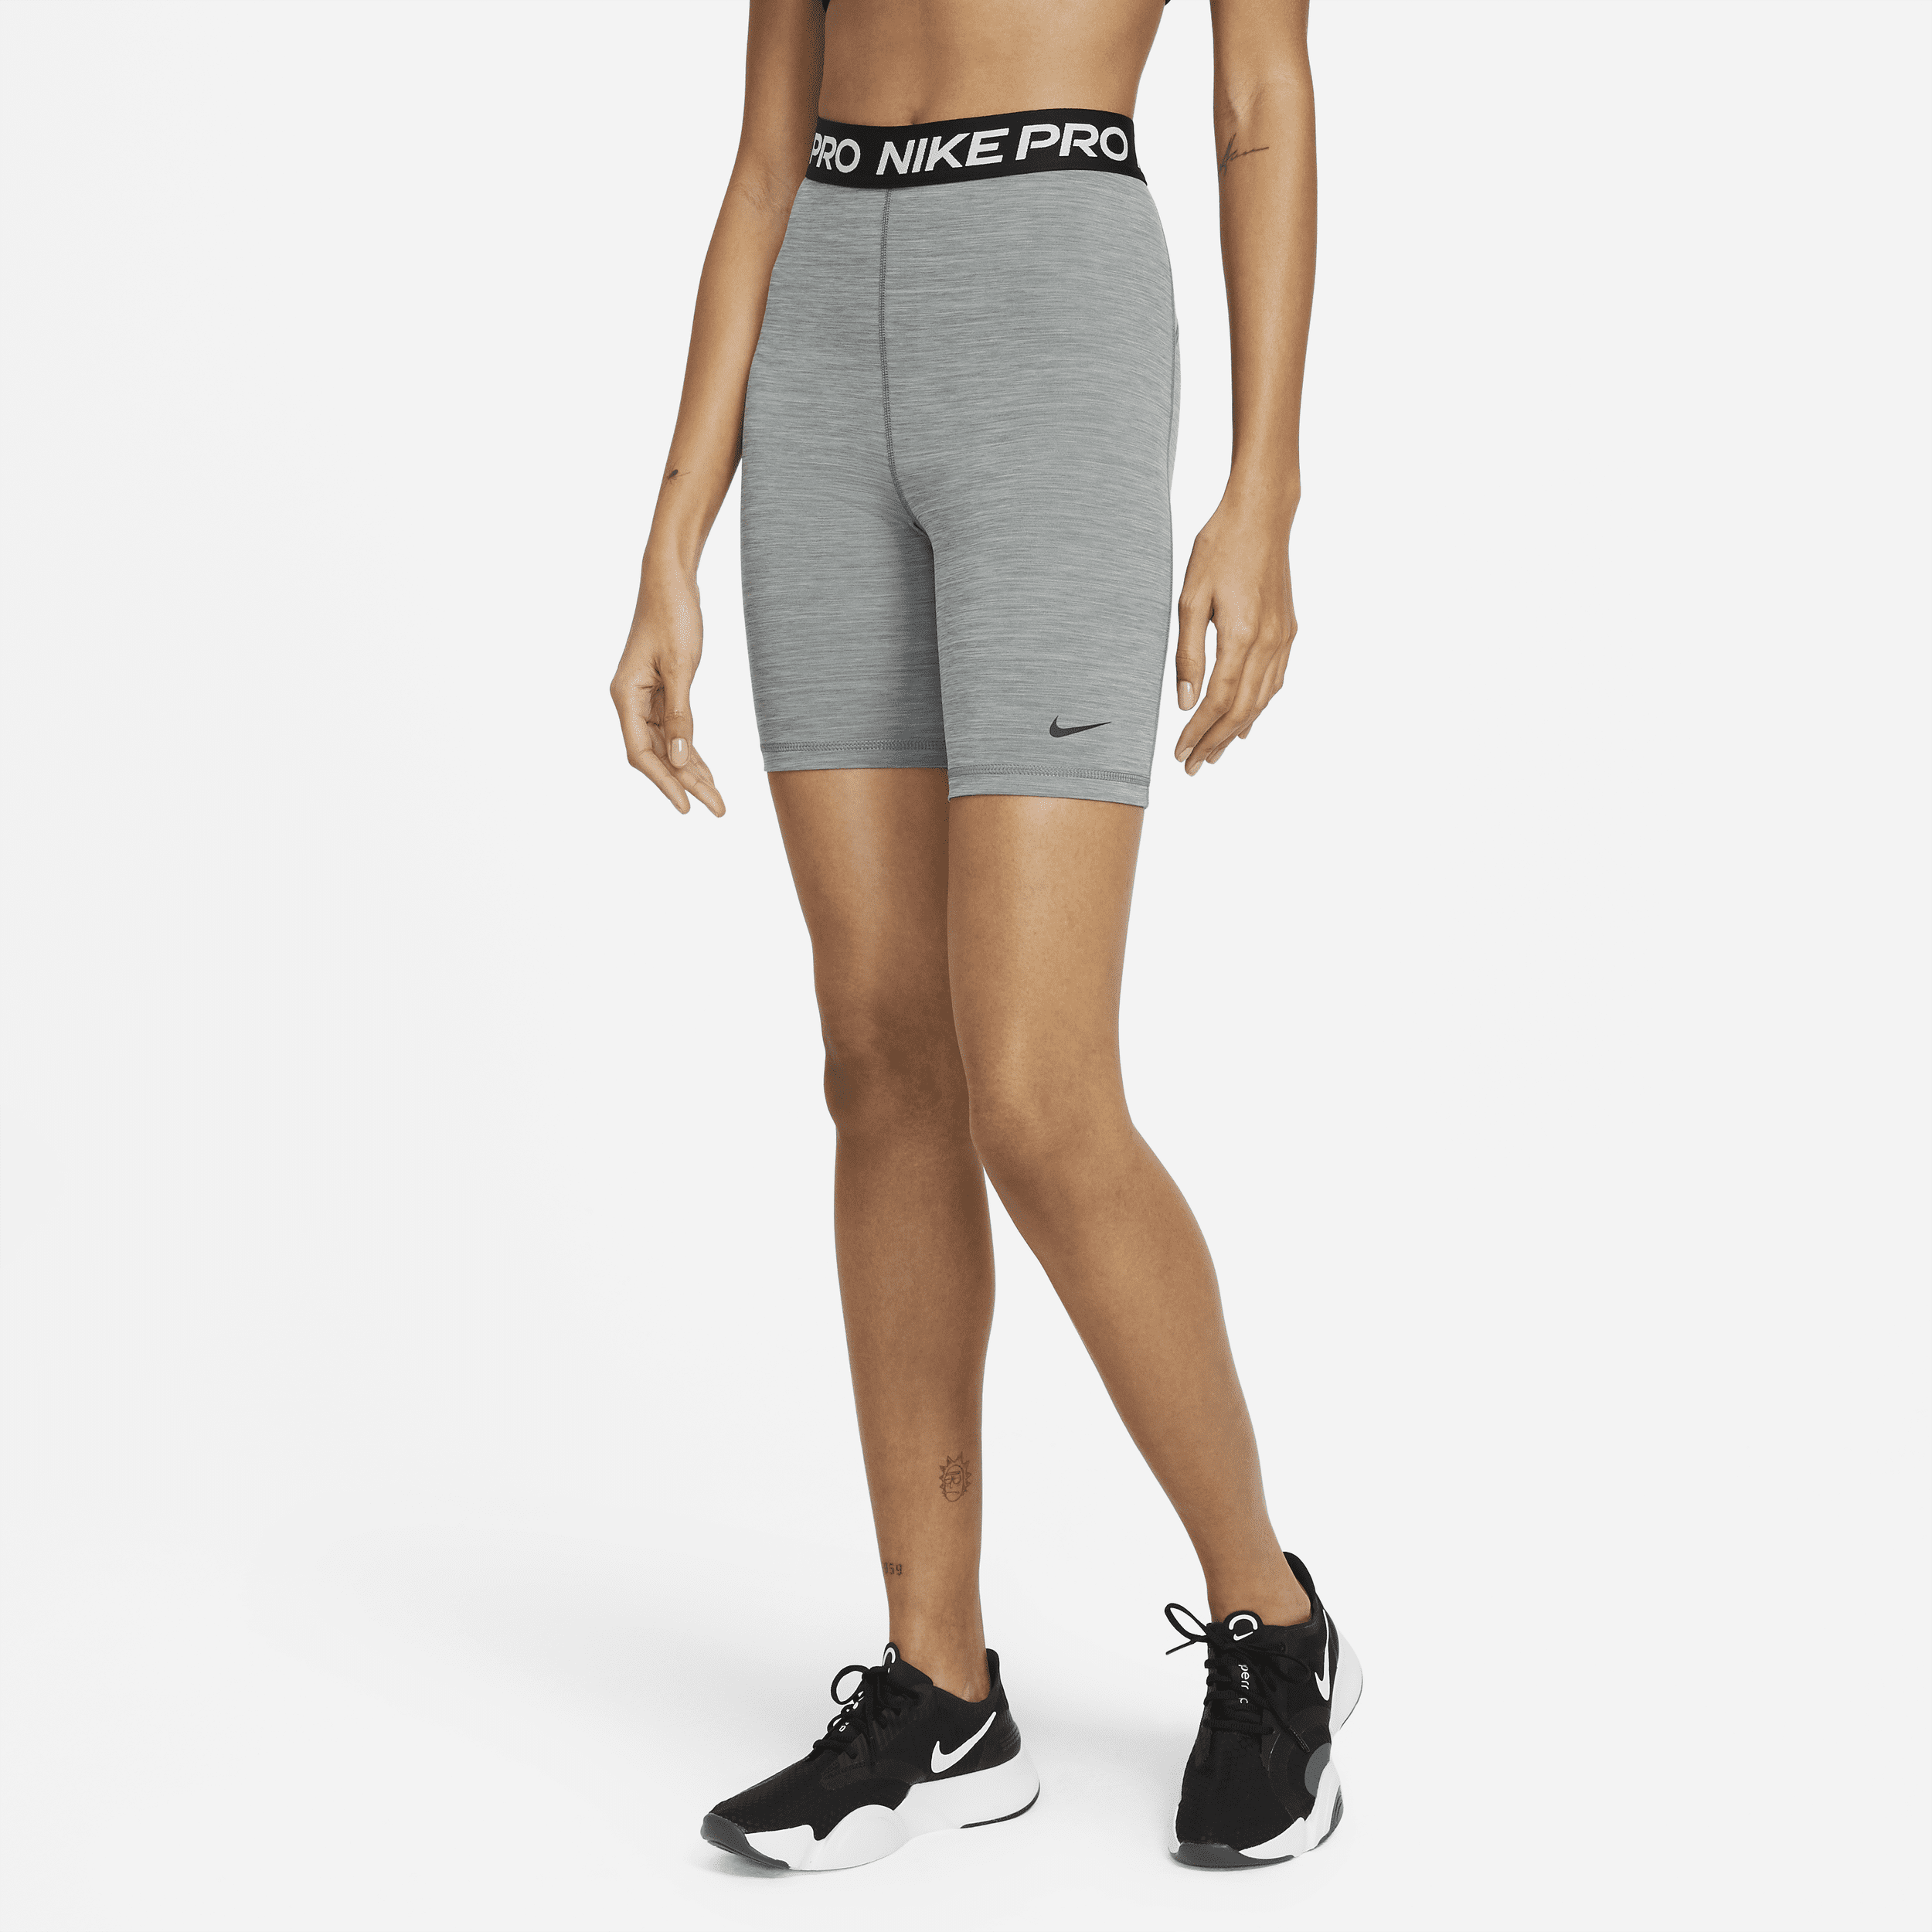 Nike Pro 365-shorts (18 cm) med høj talje til kvinder - grå